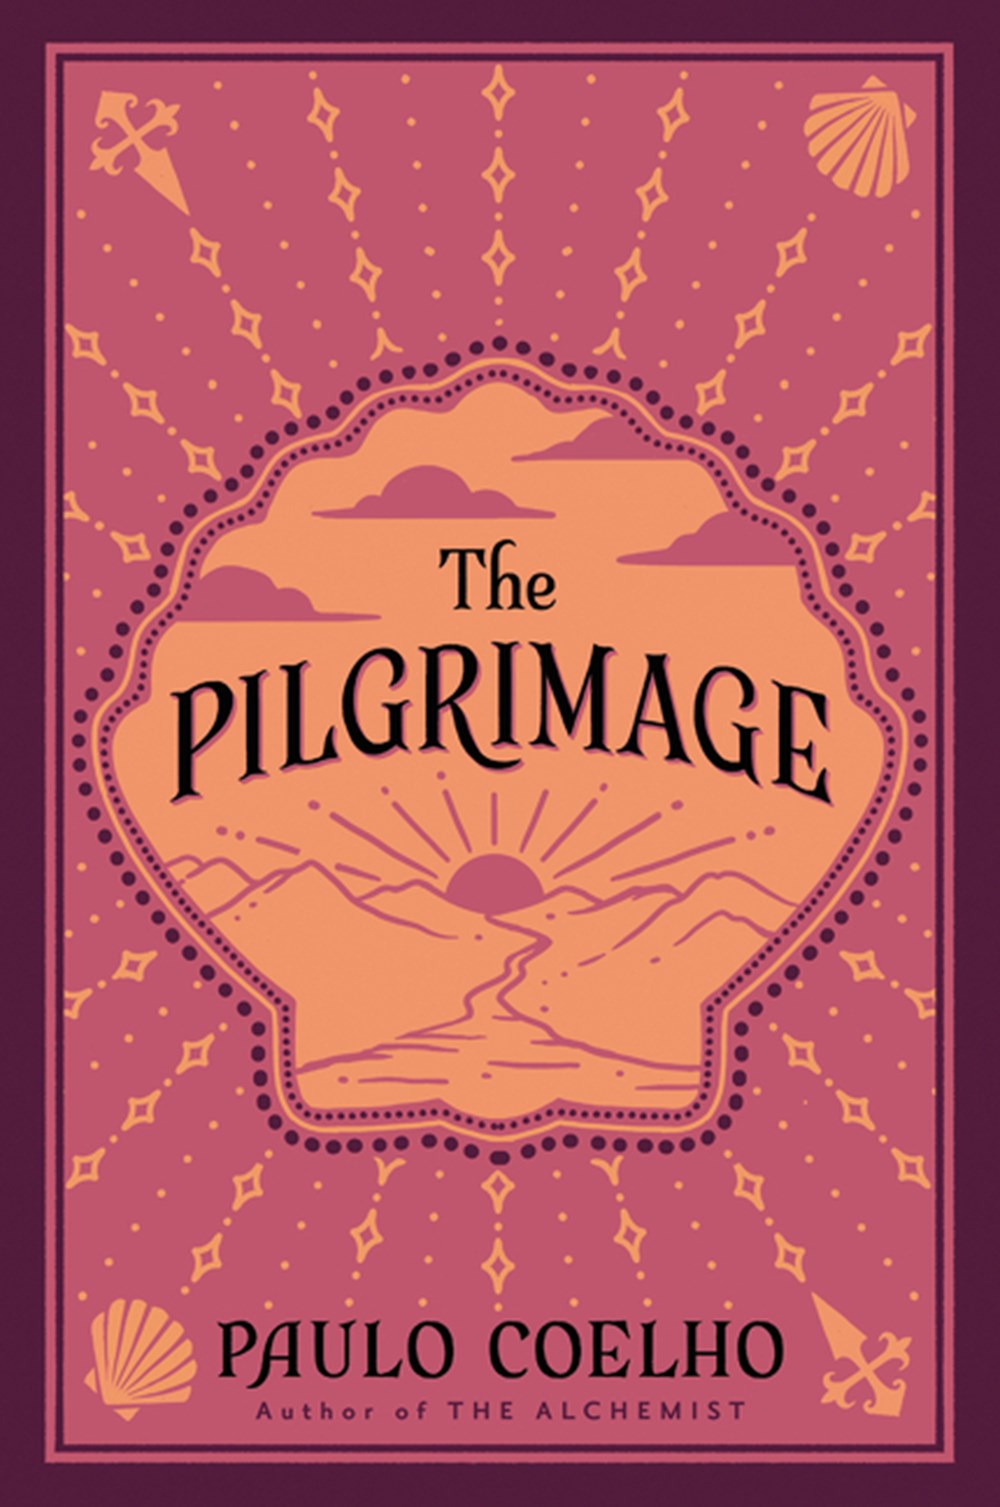 Pilgrimage: A Contemporary Quest for Ancient Wisdom